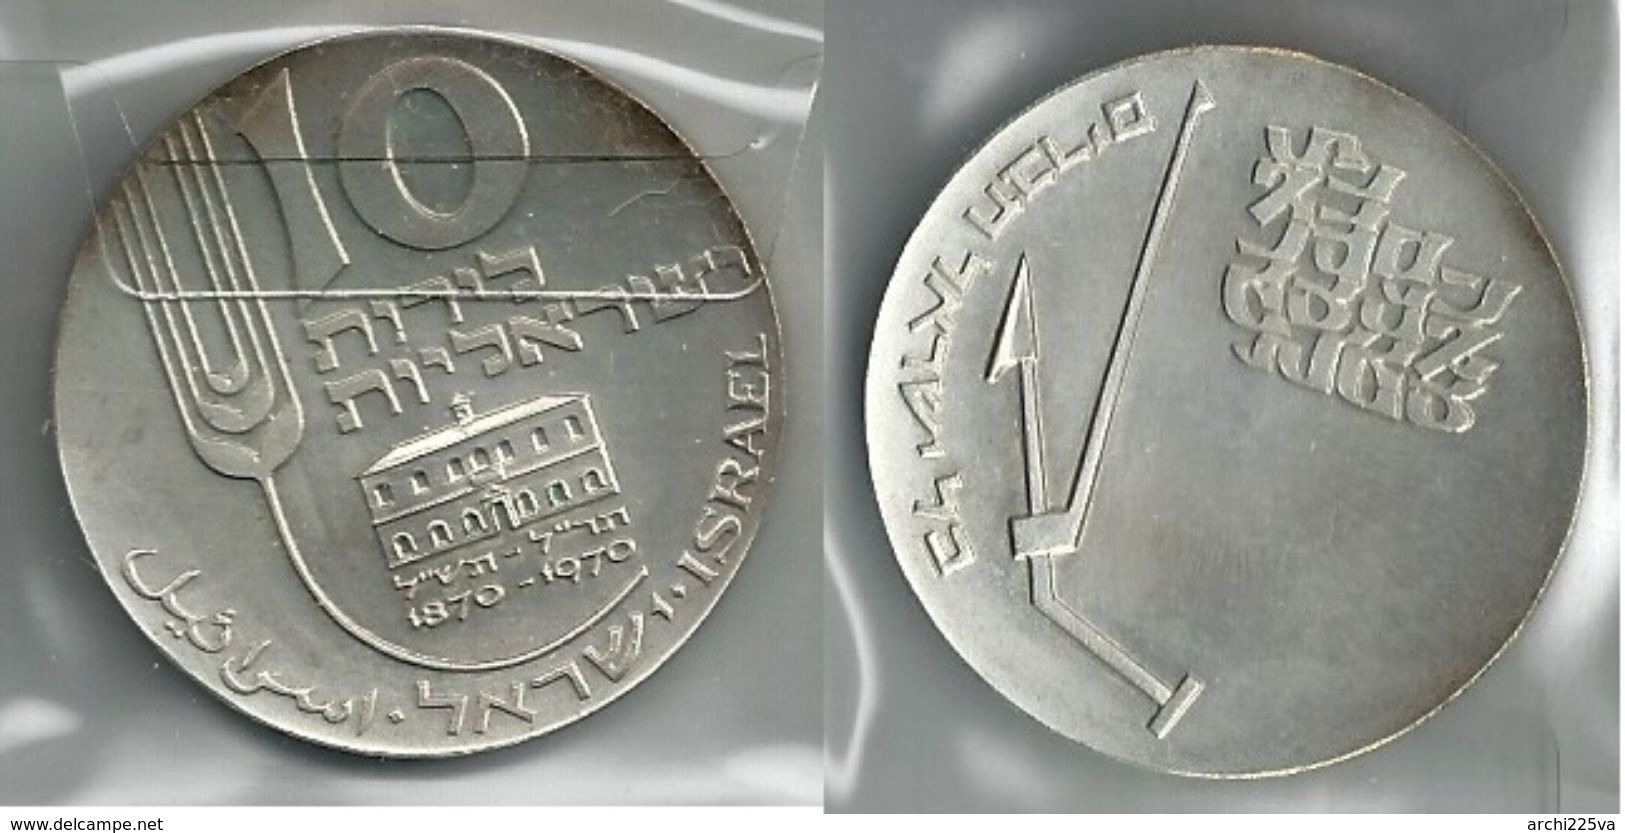 ISRAELE 1970 - 10 IL. SPL / FDC Proof - Argento / Argent / Silver 900 / 000 - Bustina Semplice - Israele